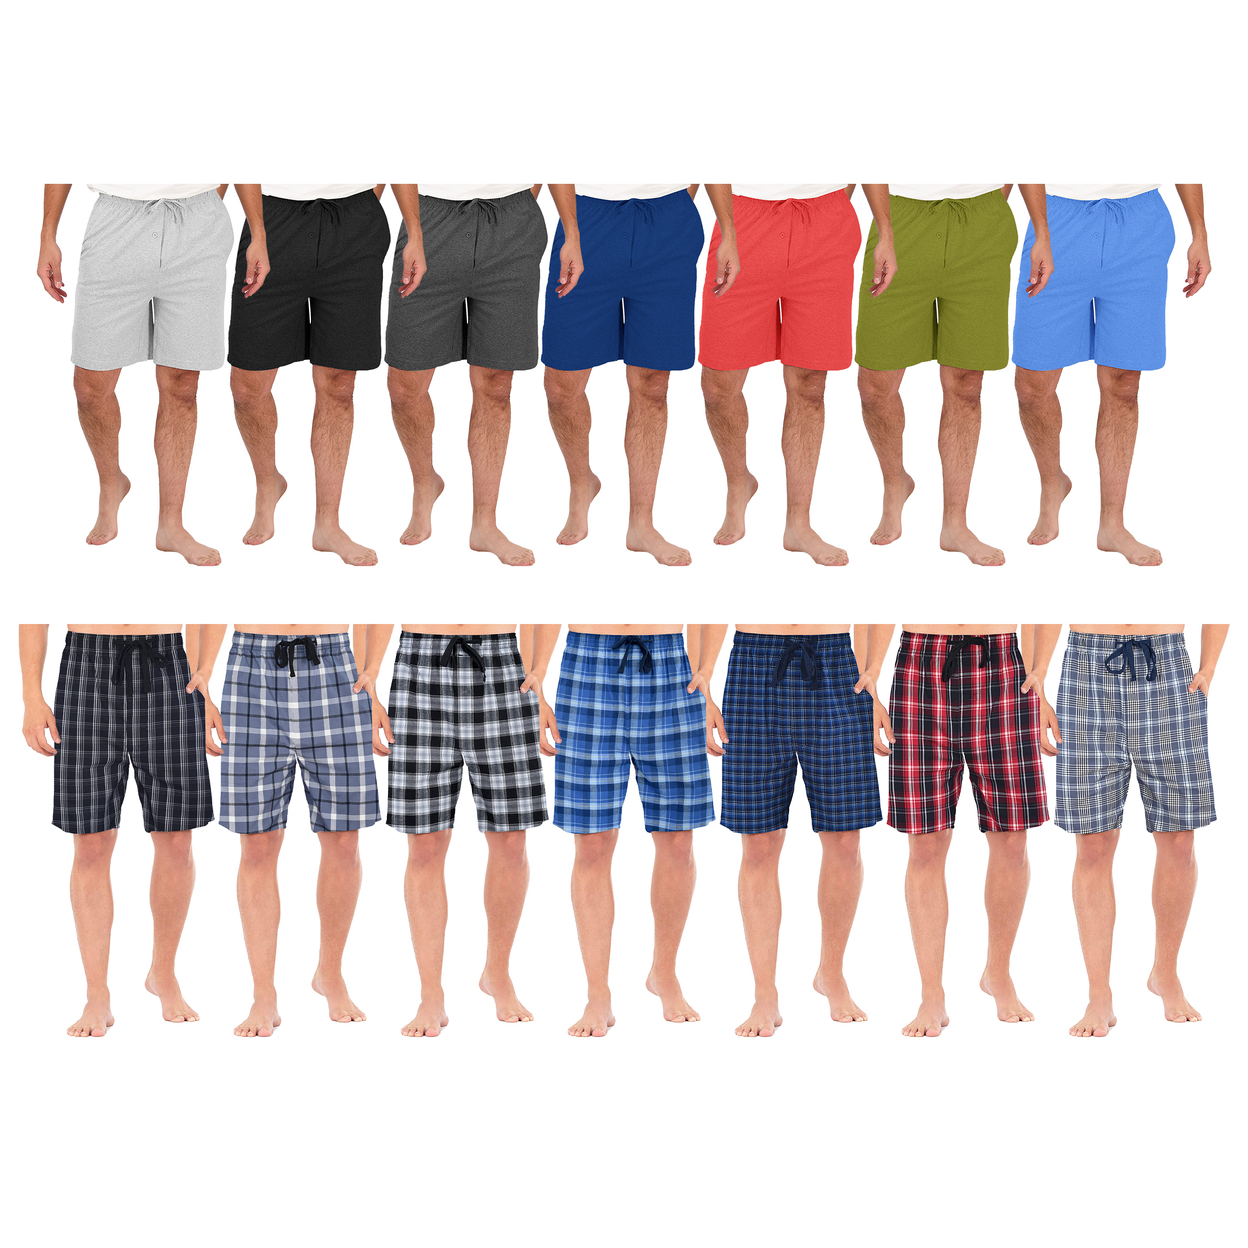 2-Pack: Men's Ultra Soft Knit Lounge Pajama Sleep Shorts - Plaid, X-large